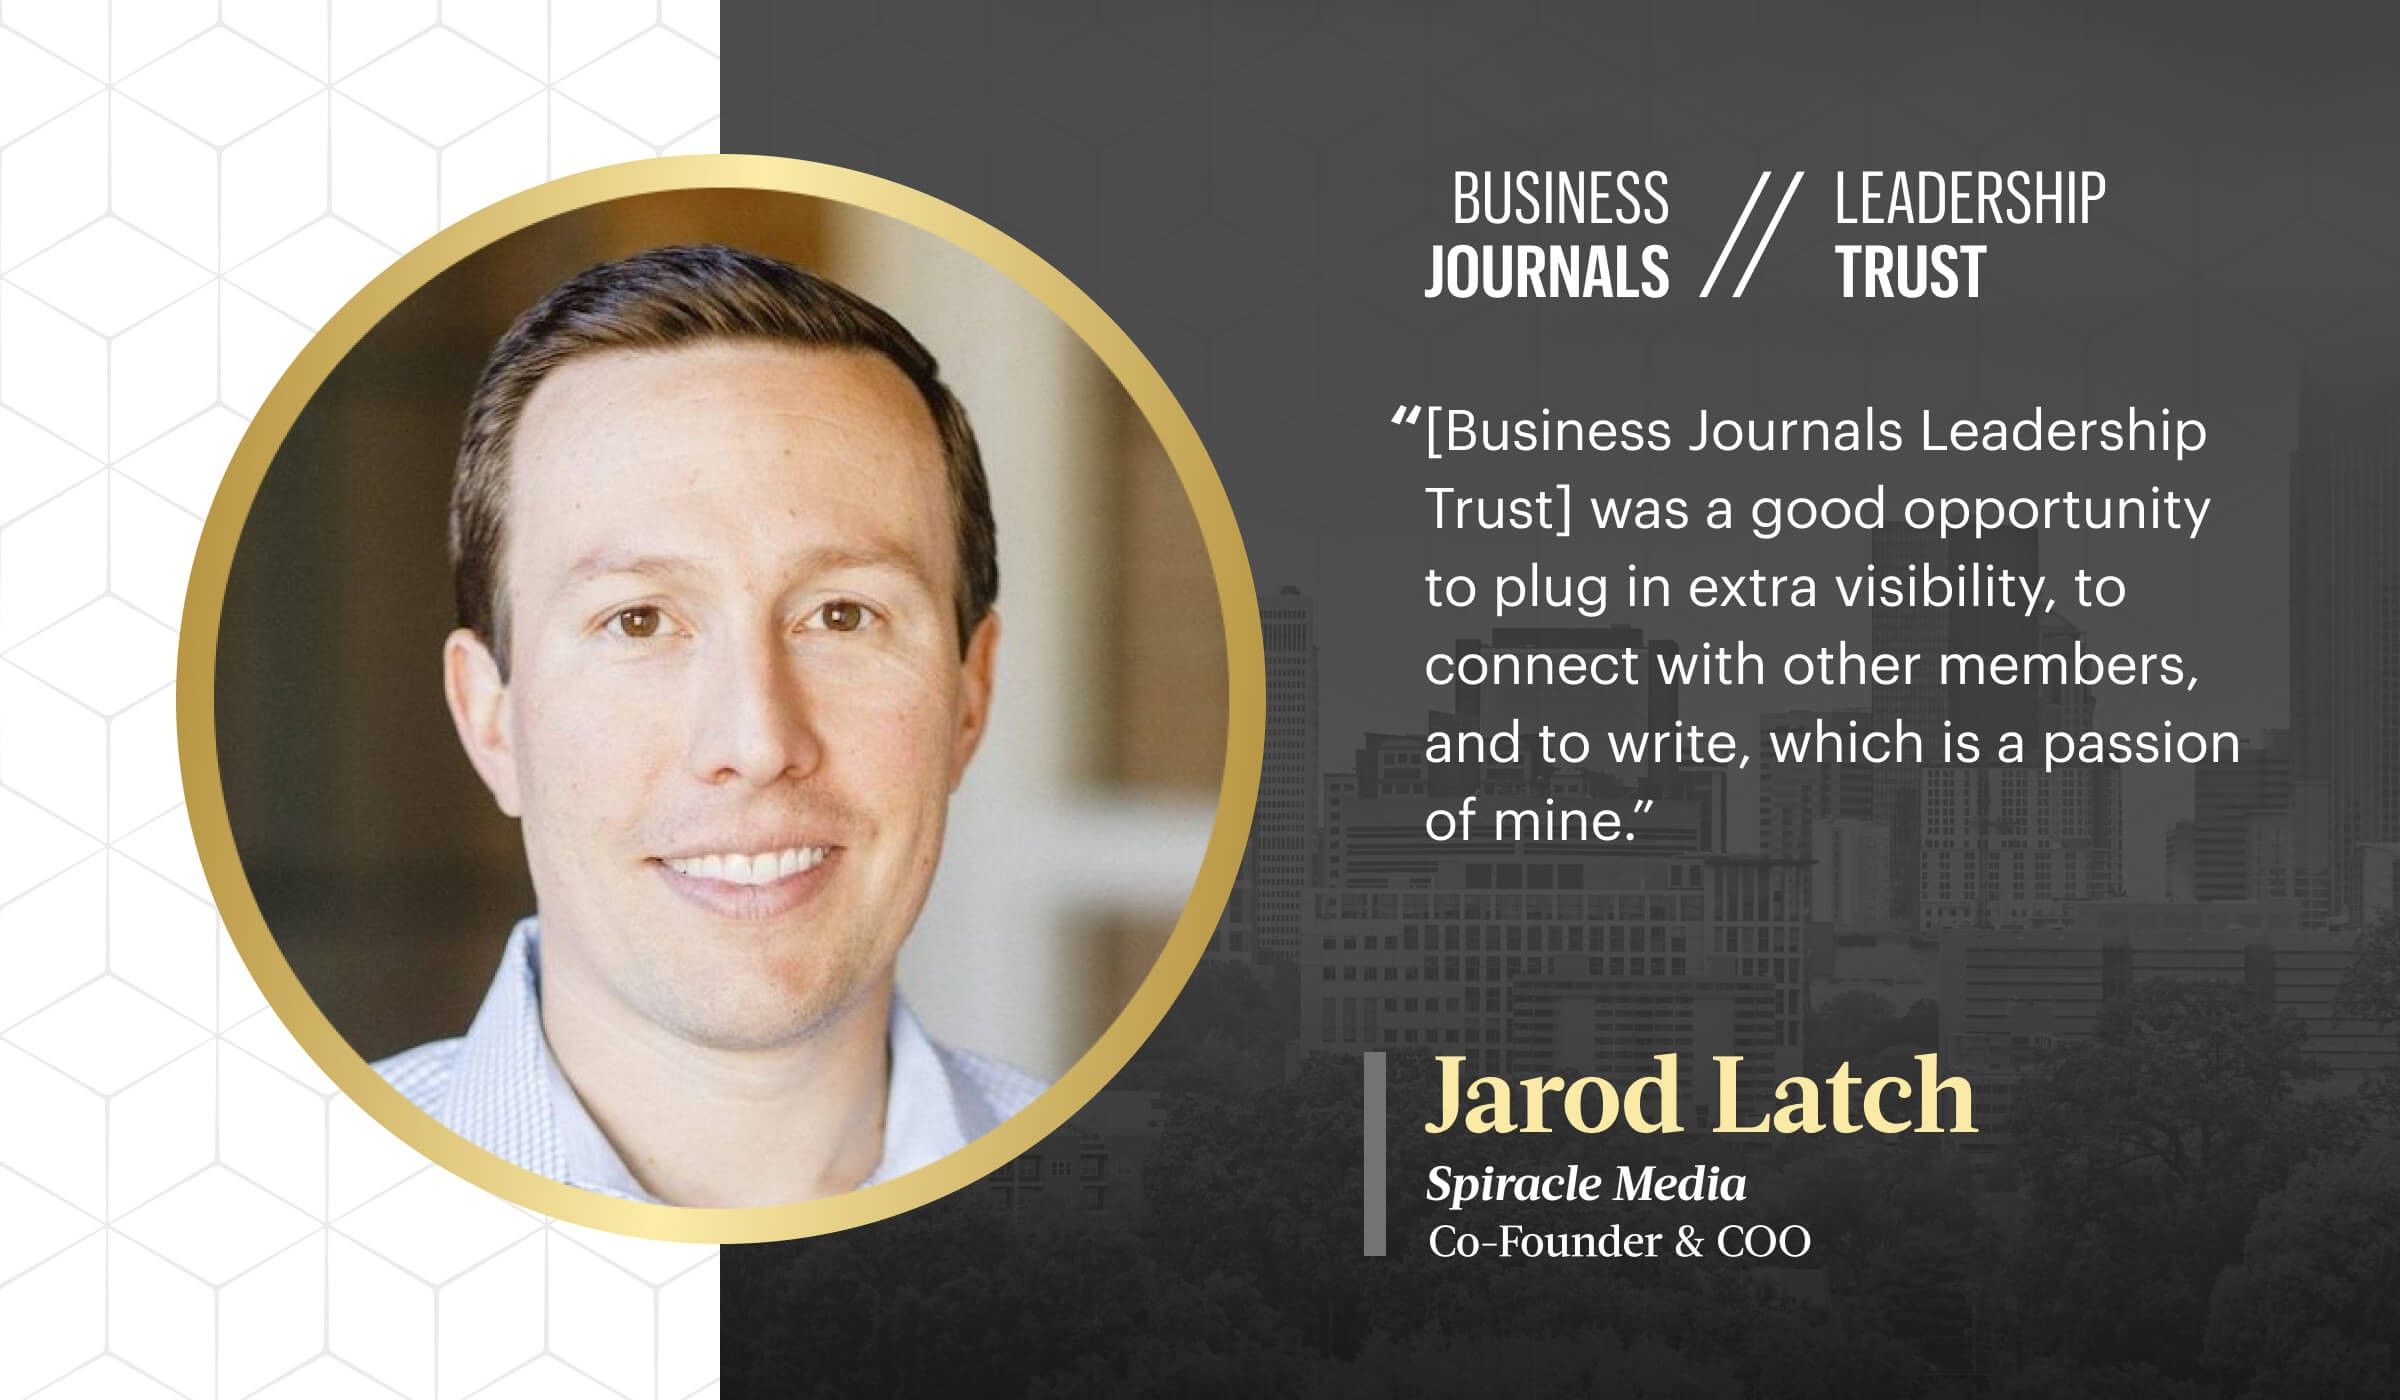 Business Journals Leadership Trust member Jarod Latch